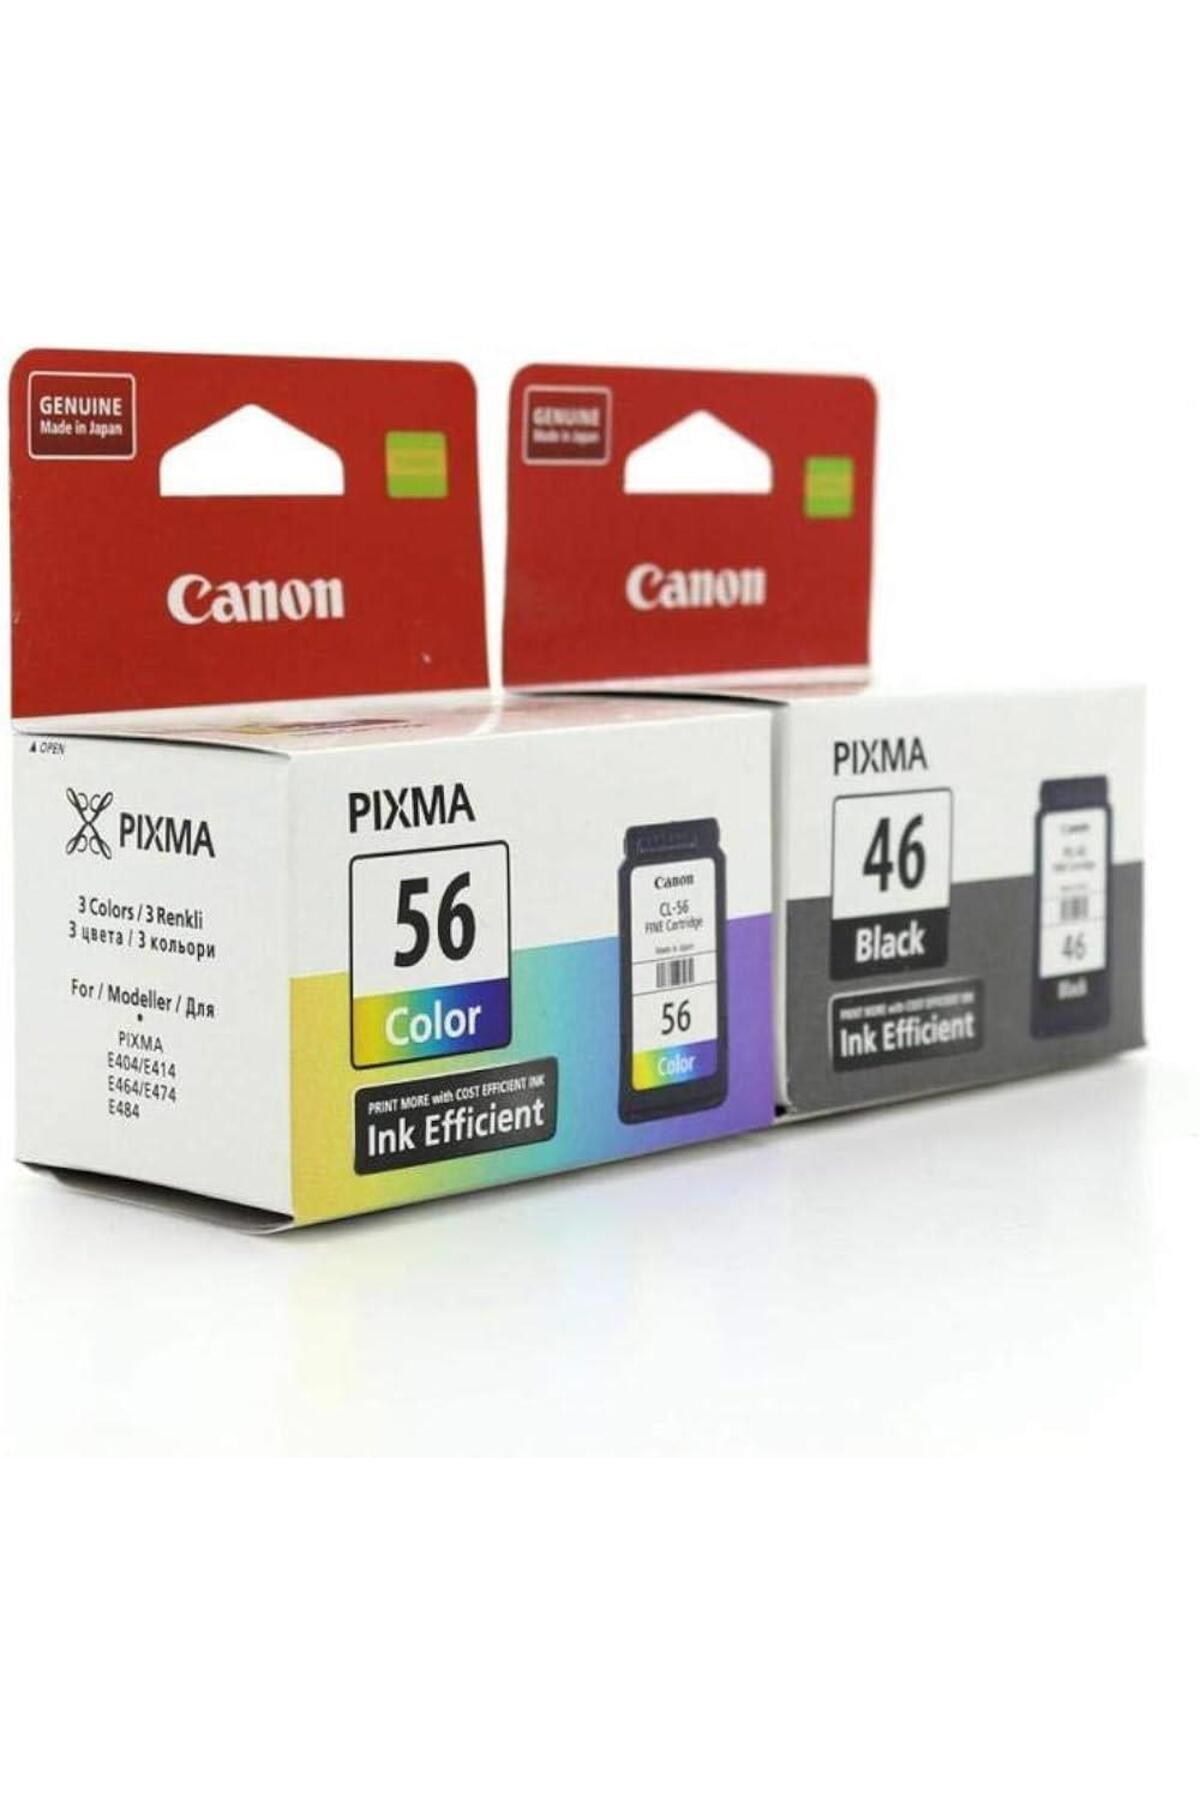 Canon Pixma E464 Kartuş / Pg46 / Cl56 Avantaj Paket Kartuş